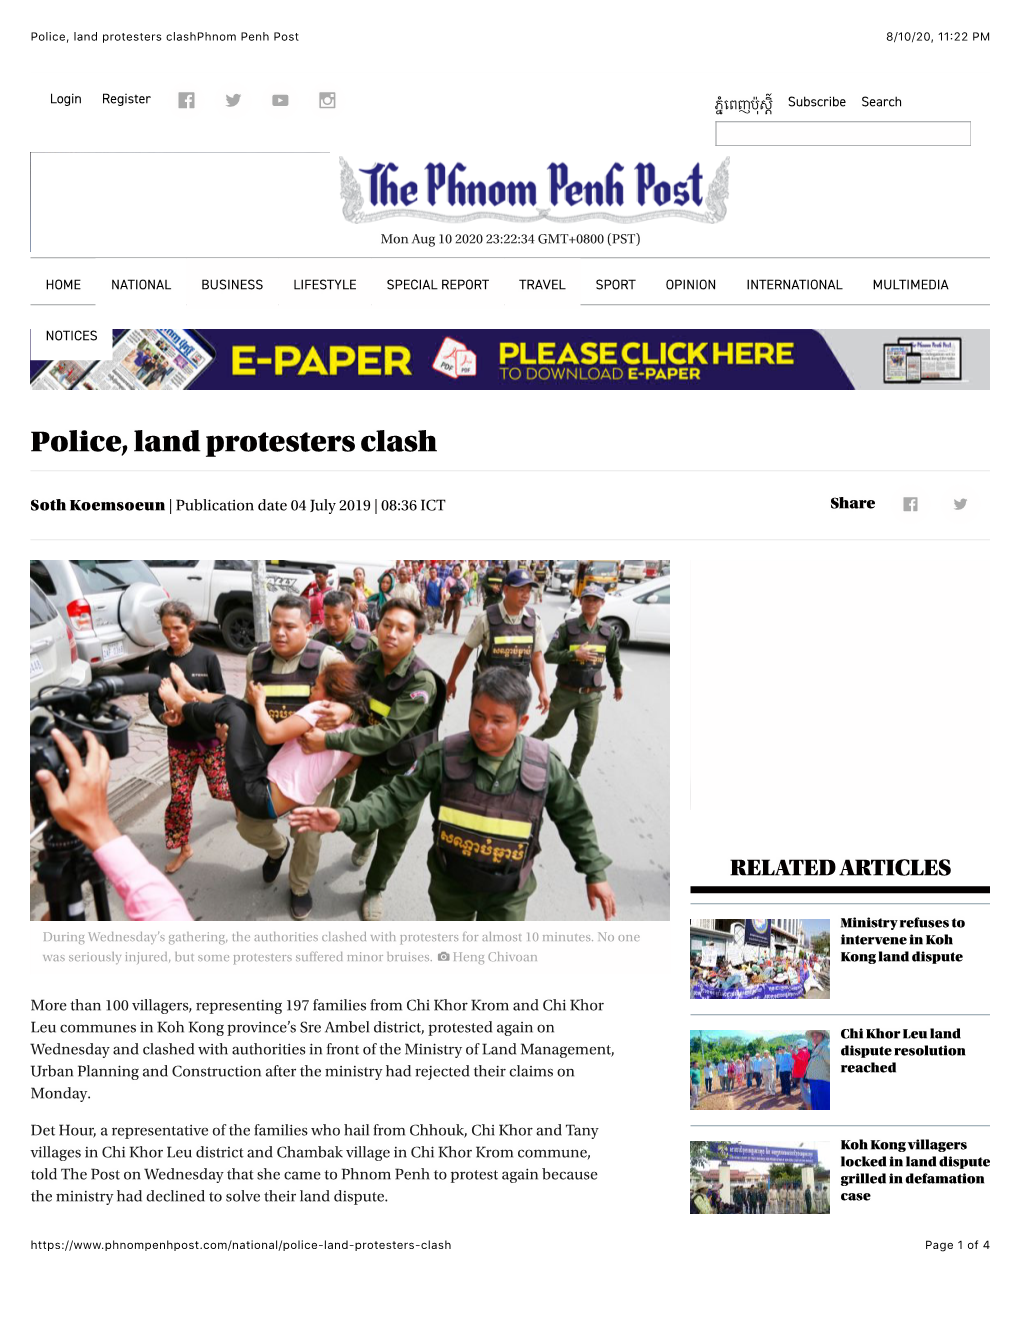 Police, Land Protesters Clashphnom Penh Post 8/10/20, 11:22 PM